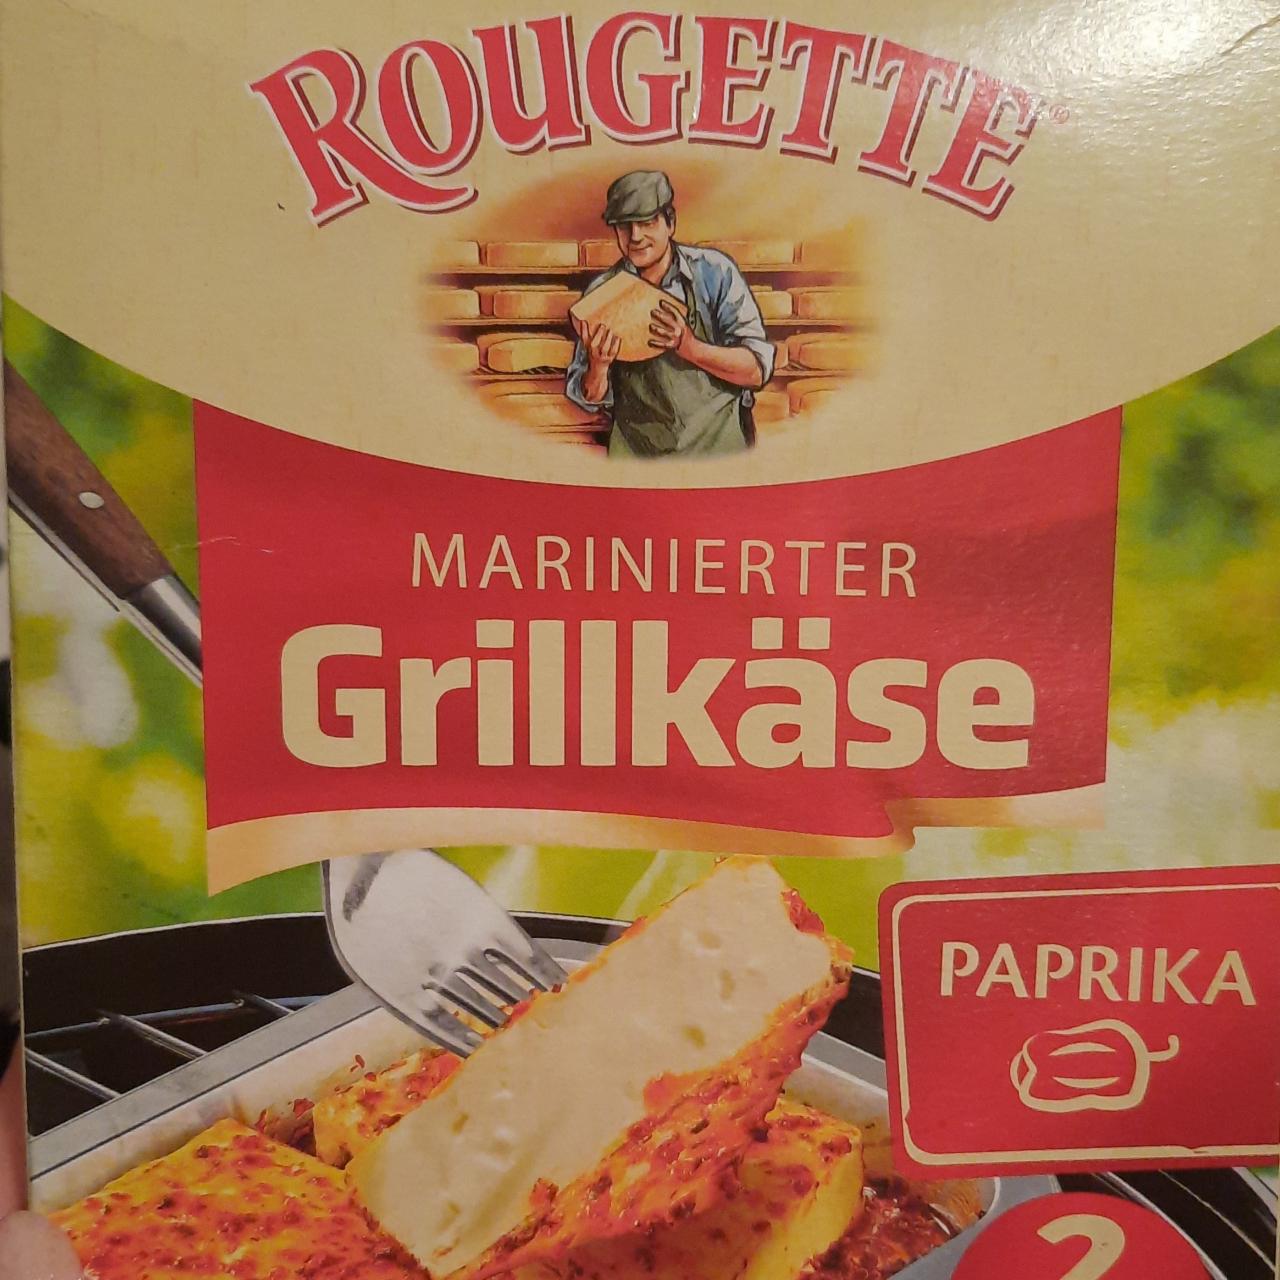 Фото - Маринований смажений сир паприка Grillkase Rougette